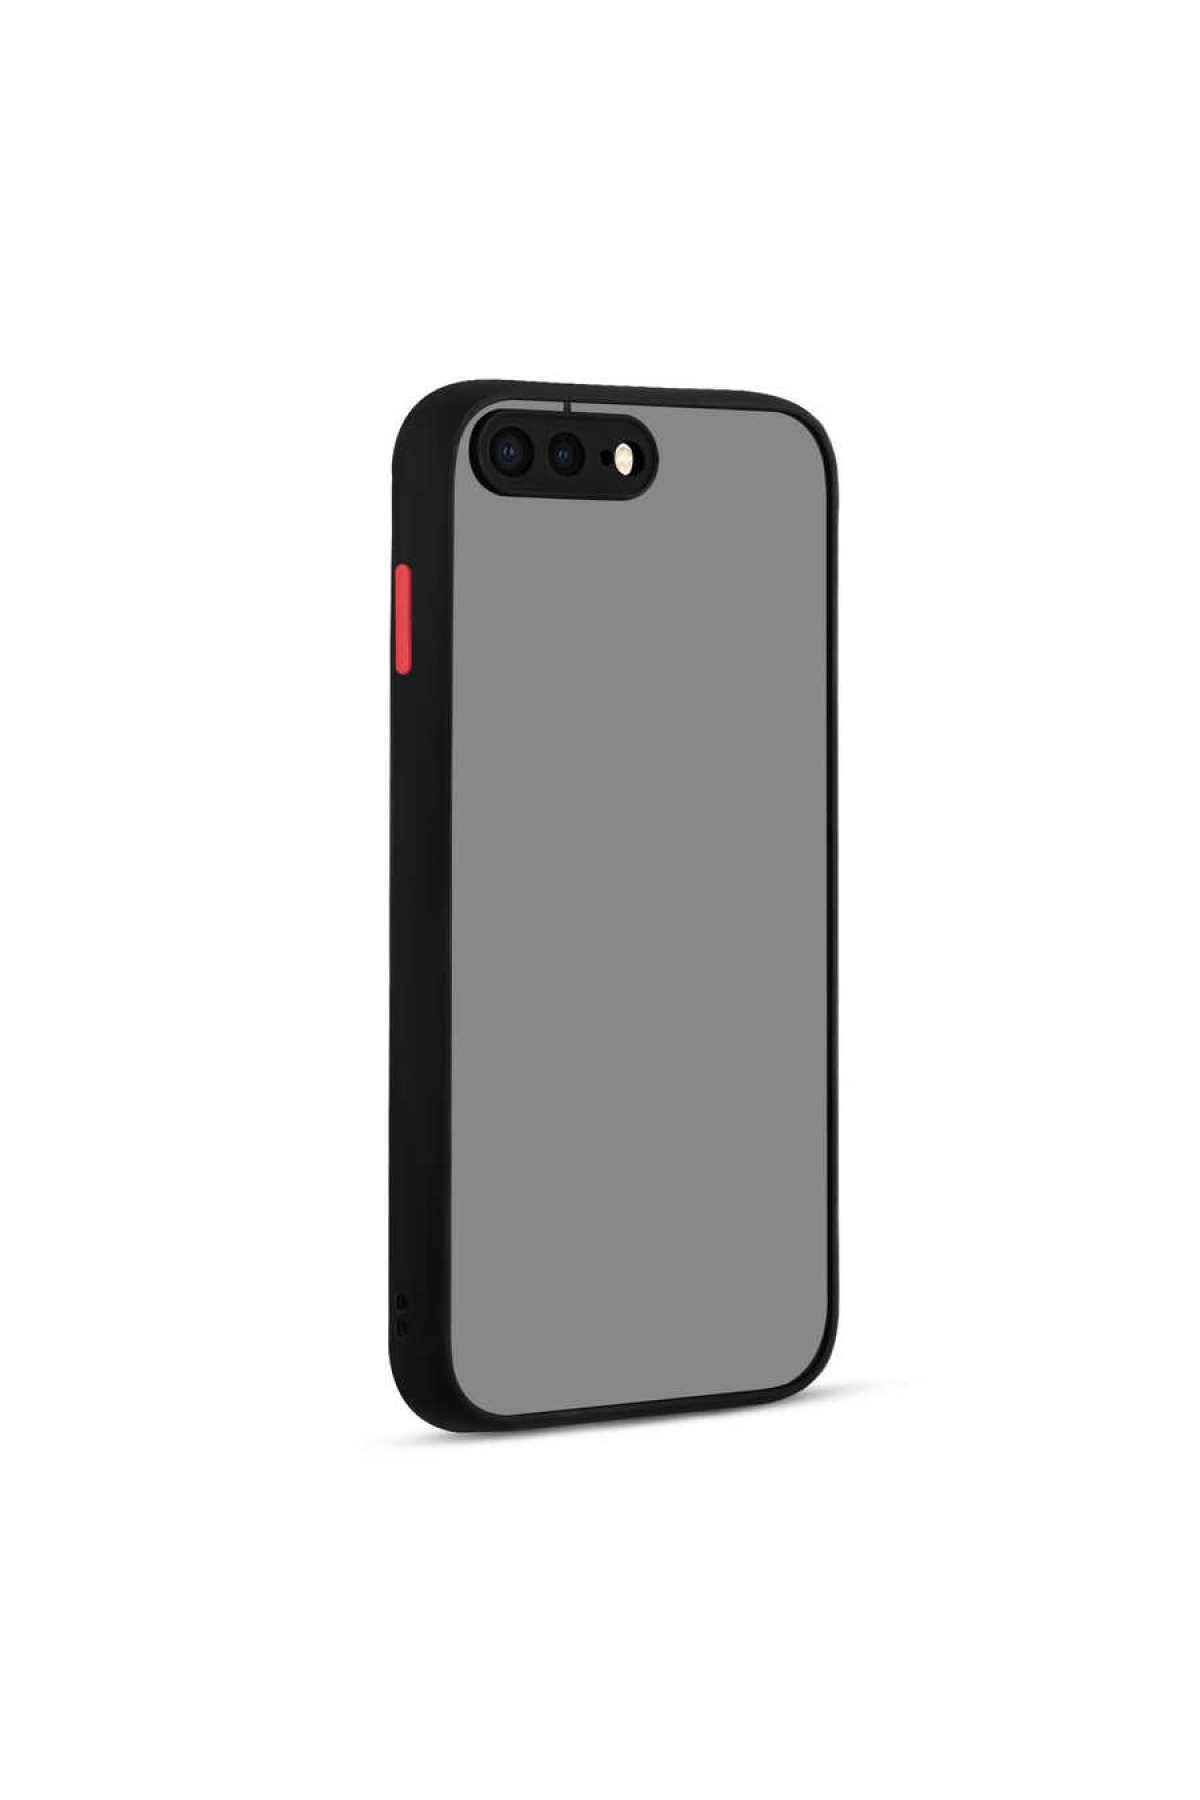 İzmirimStore Apple Iphone 8 Plus Siyah Hux Kapak Kılıf